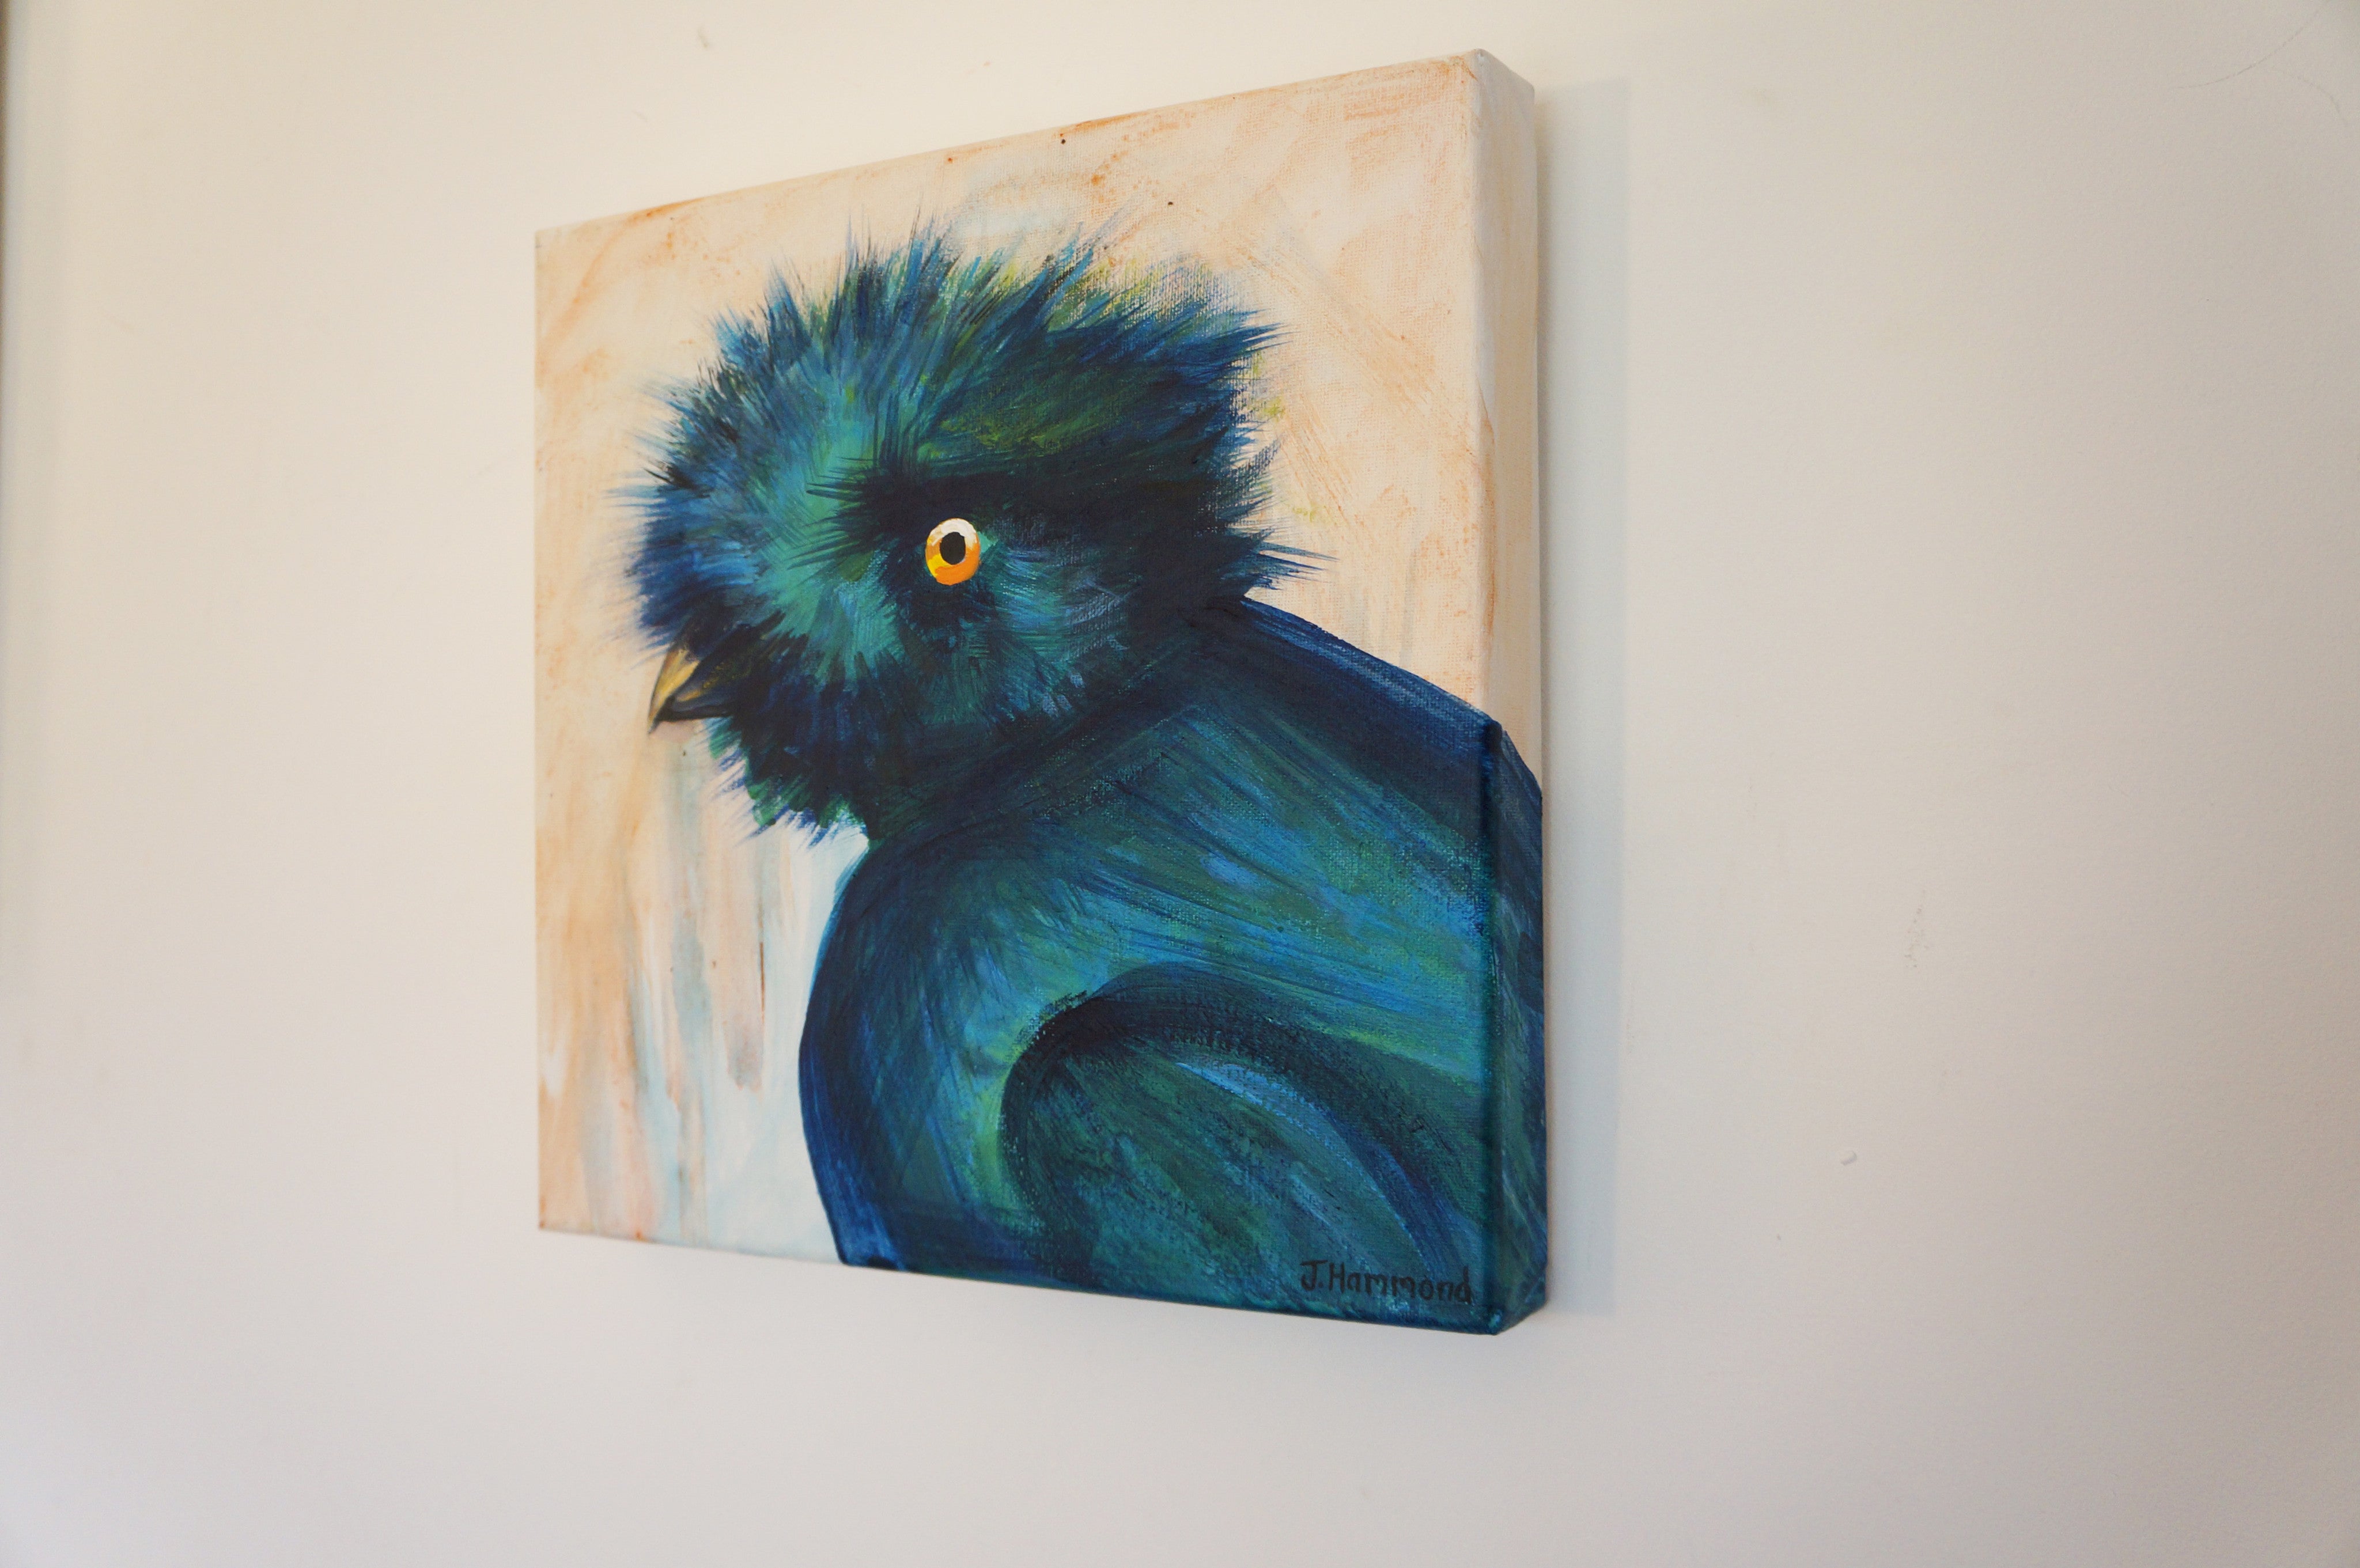 Bad Hair Day - Bird Portrait Painting  Smart Deco Homeware Lighting and Art by Jacqueline hammond